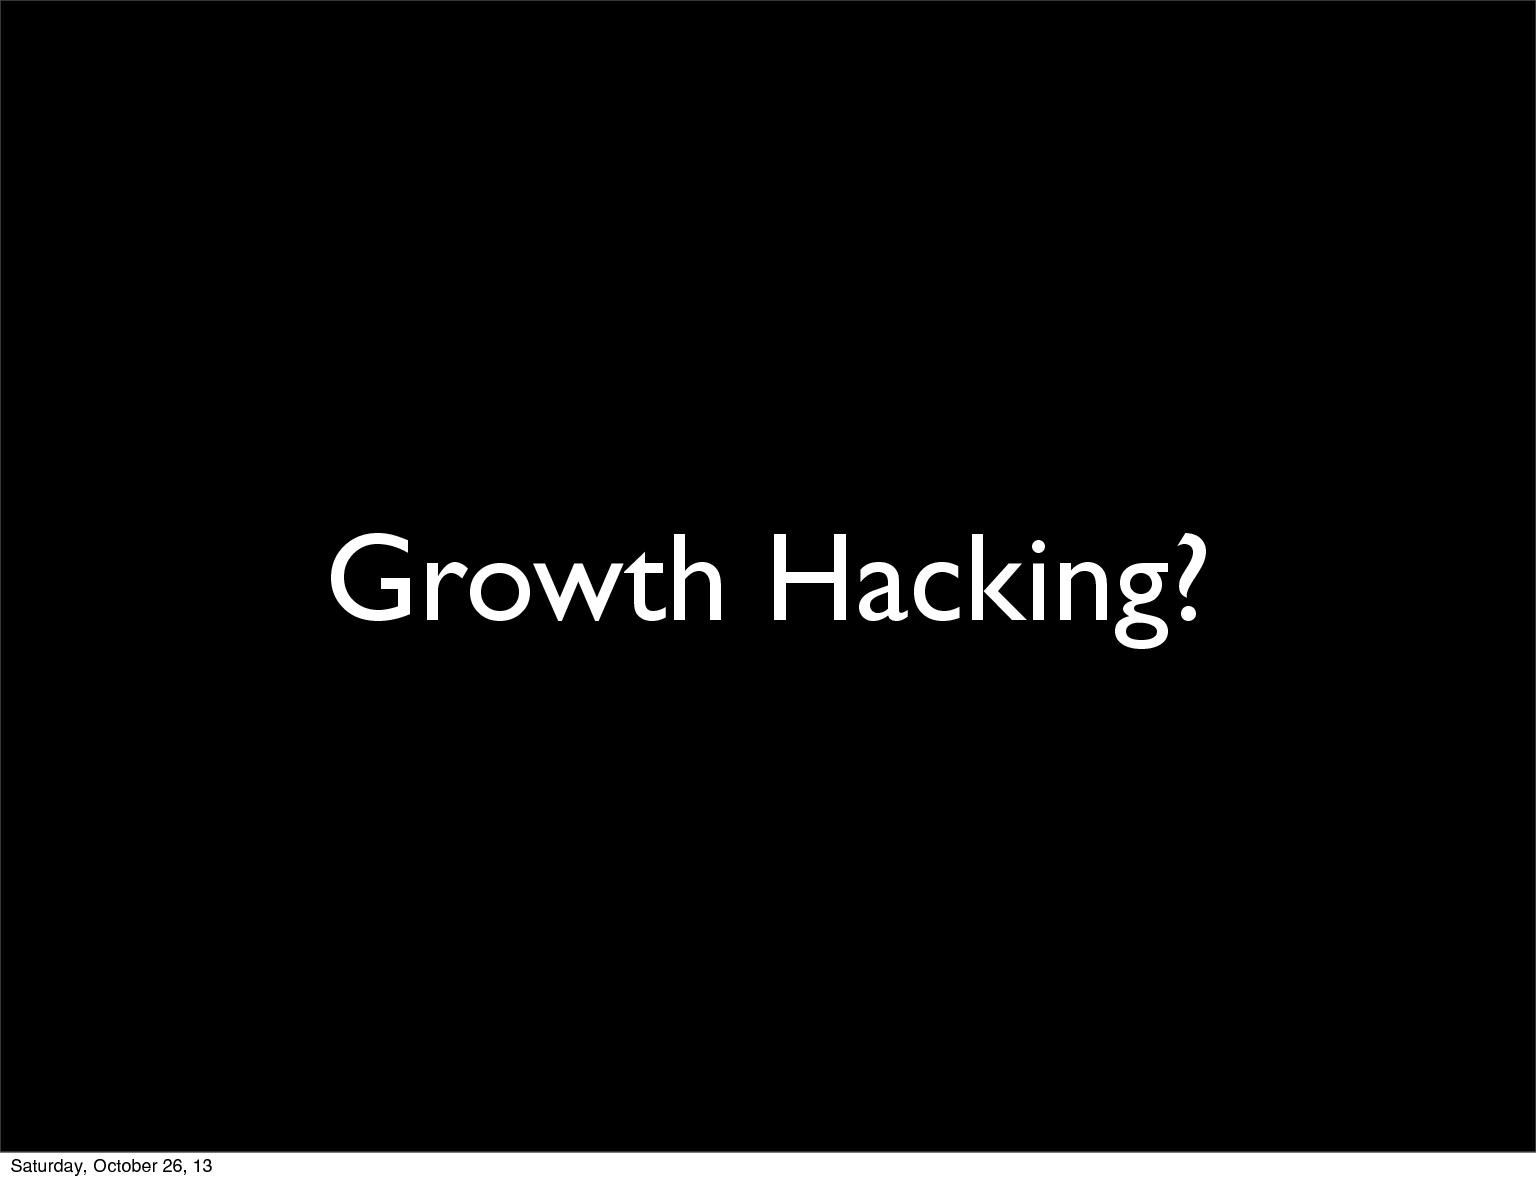 Файл:Growth hacking, tips and trics (Байрам Аннаков, ProductCamp-2013).pdf